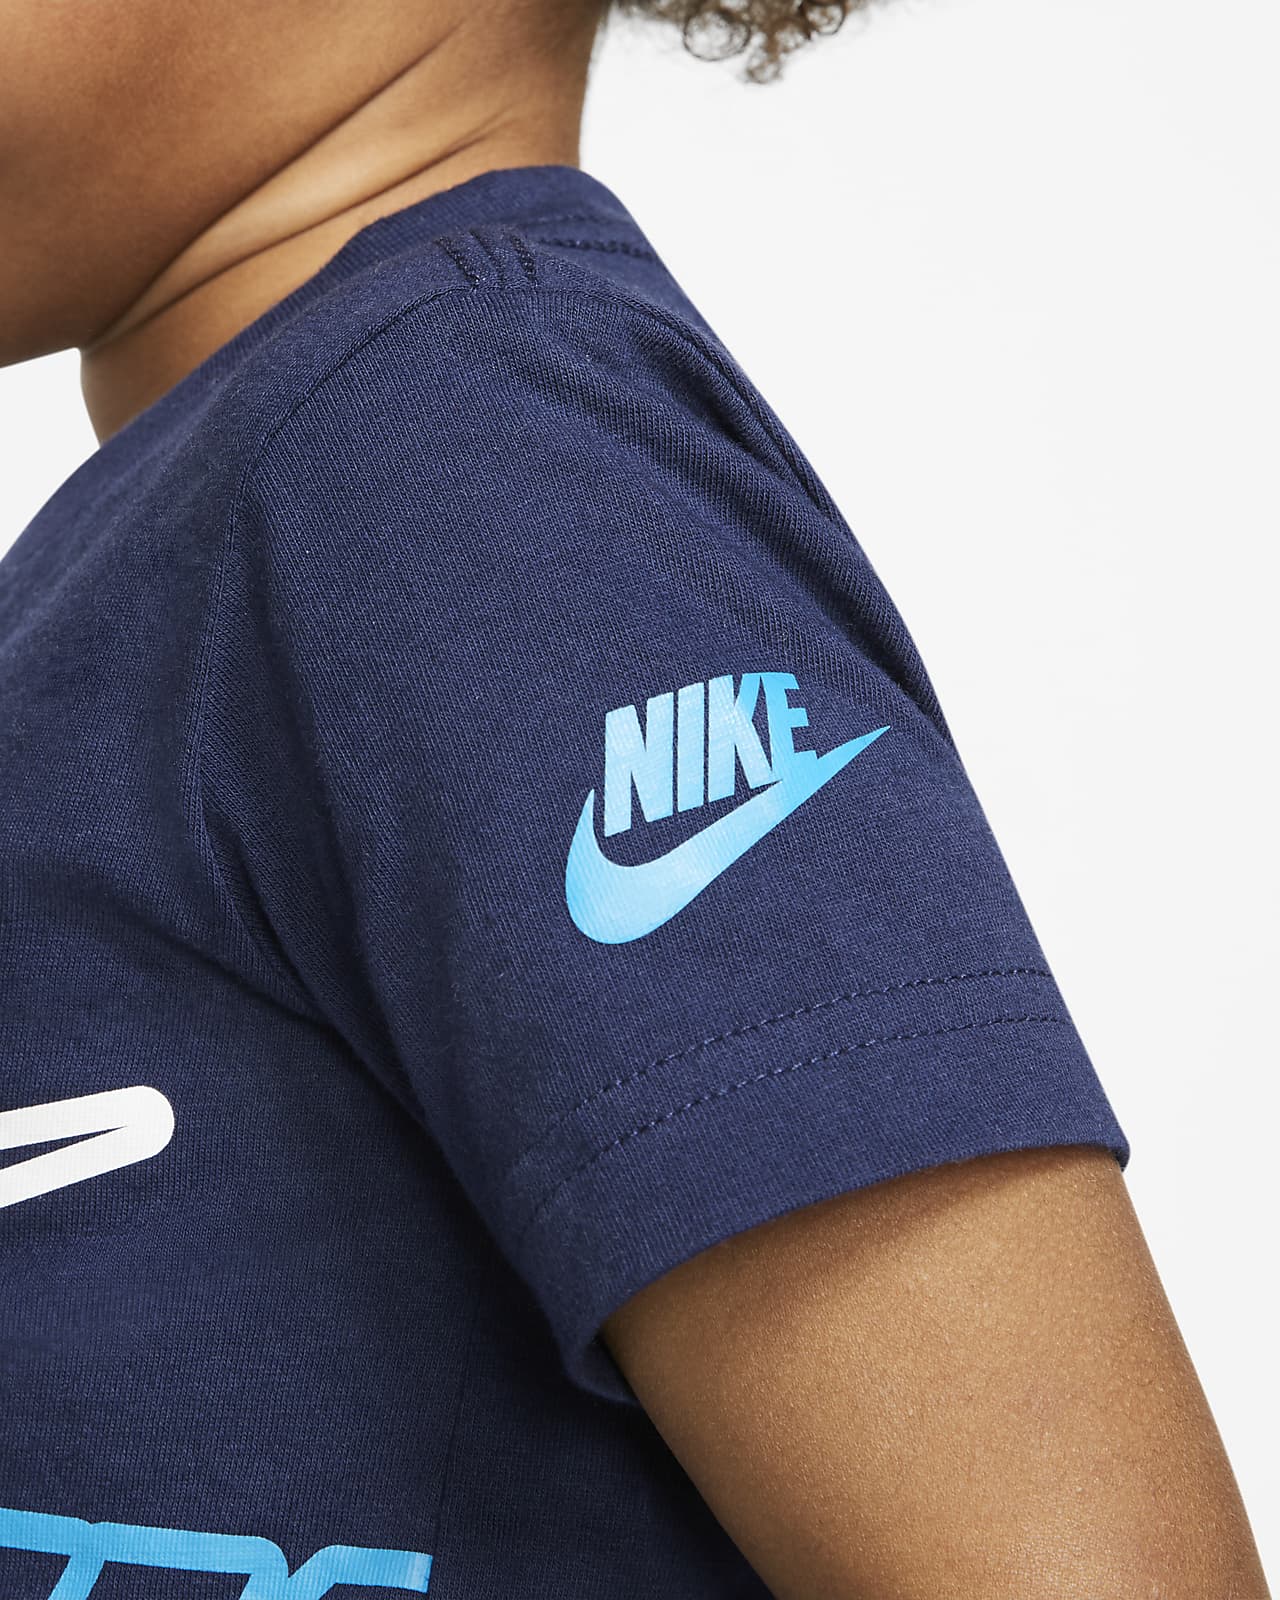 Nike Sportswear Toddler T-Shirt and Shorts Set. Nike.com